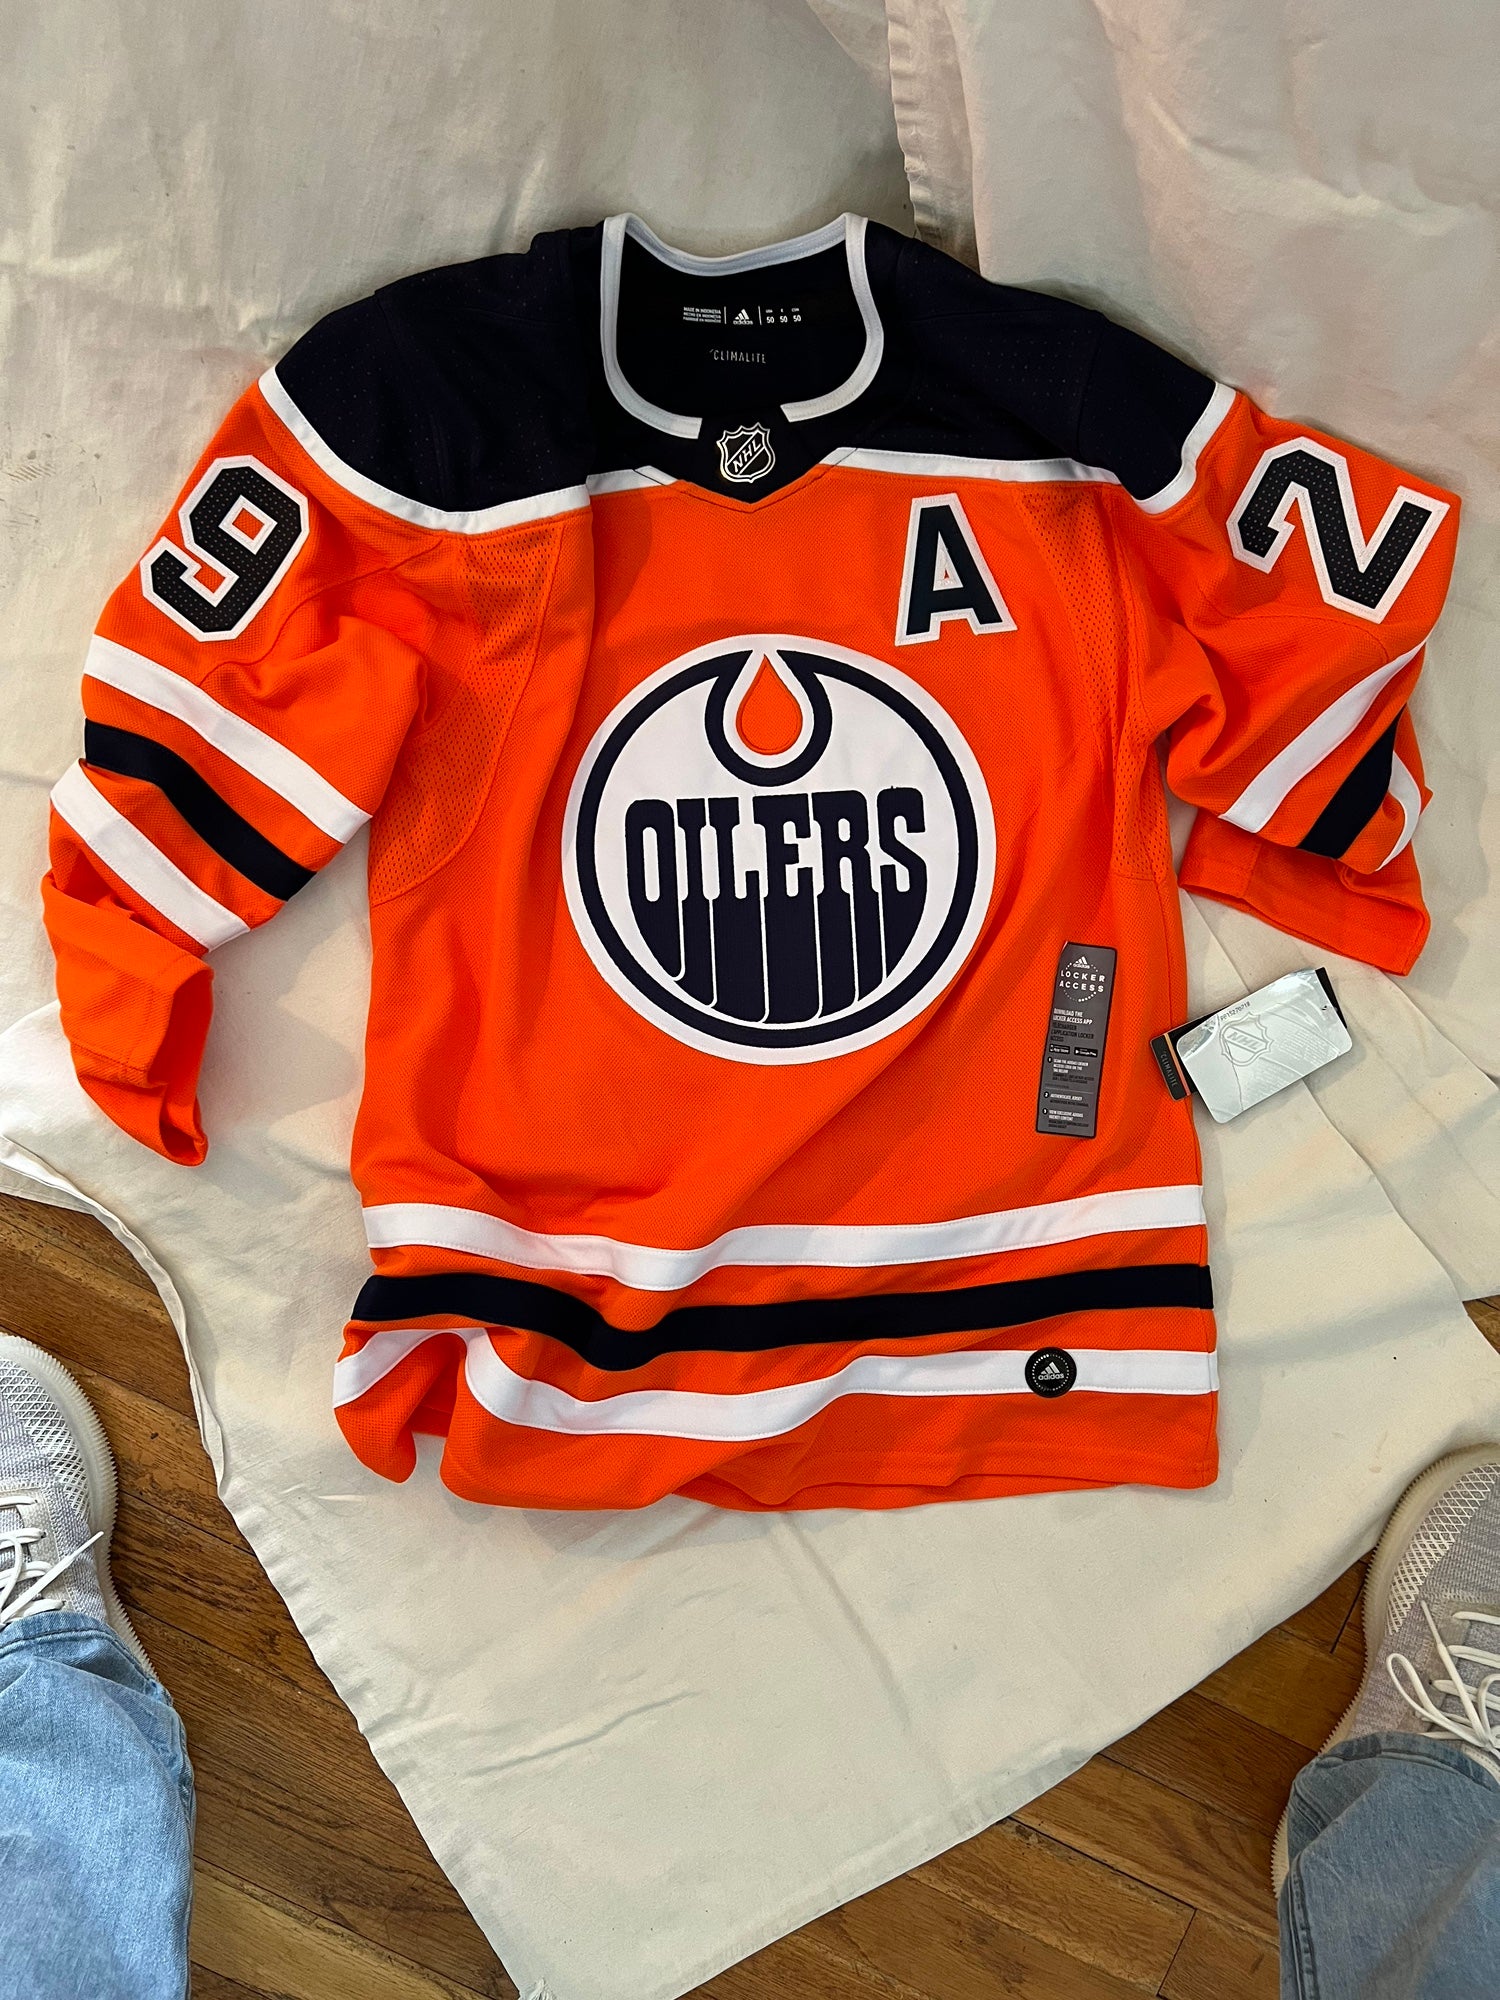 New Authentic Adidas Edmonton Oilers NHL Hockey Jersey Size 46 Medium $180